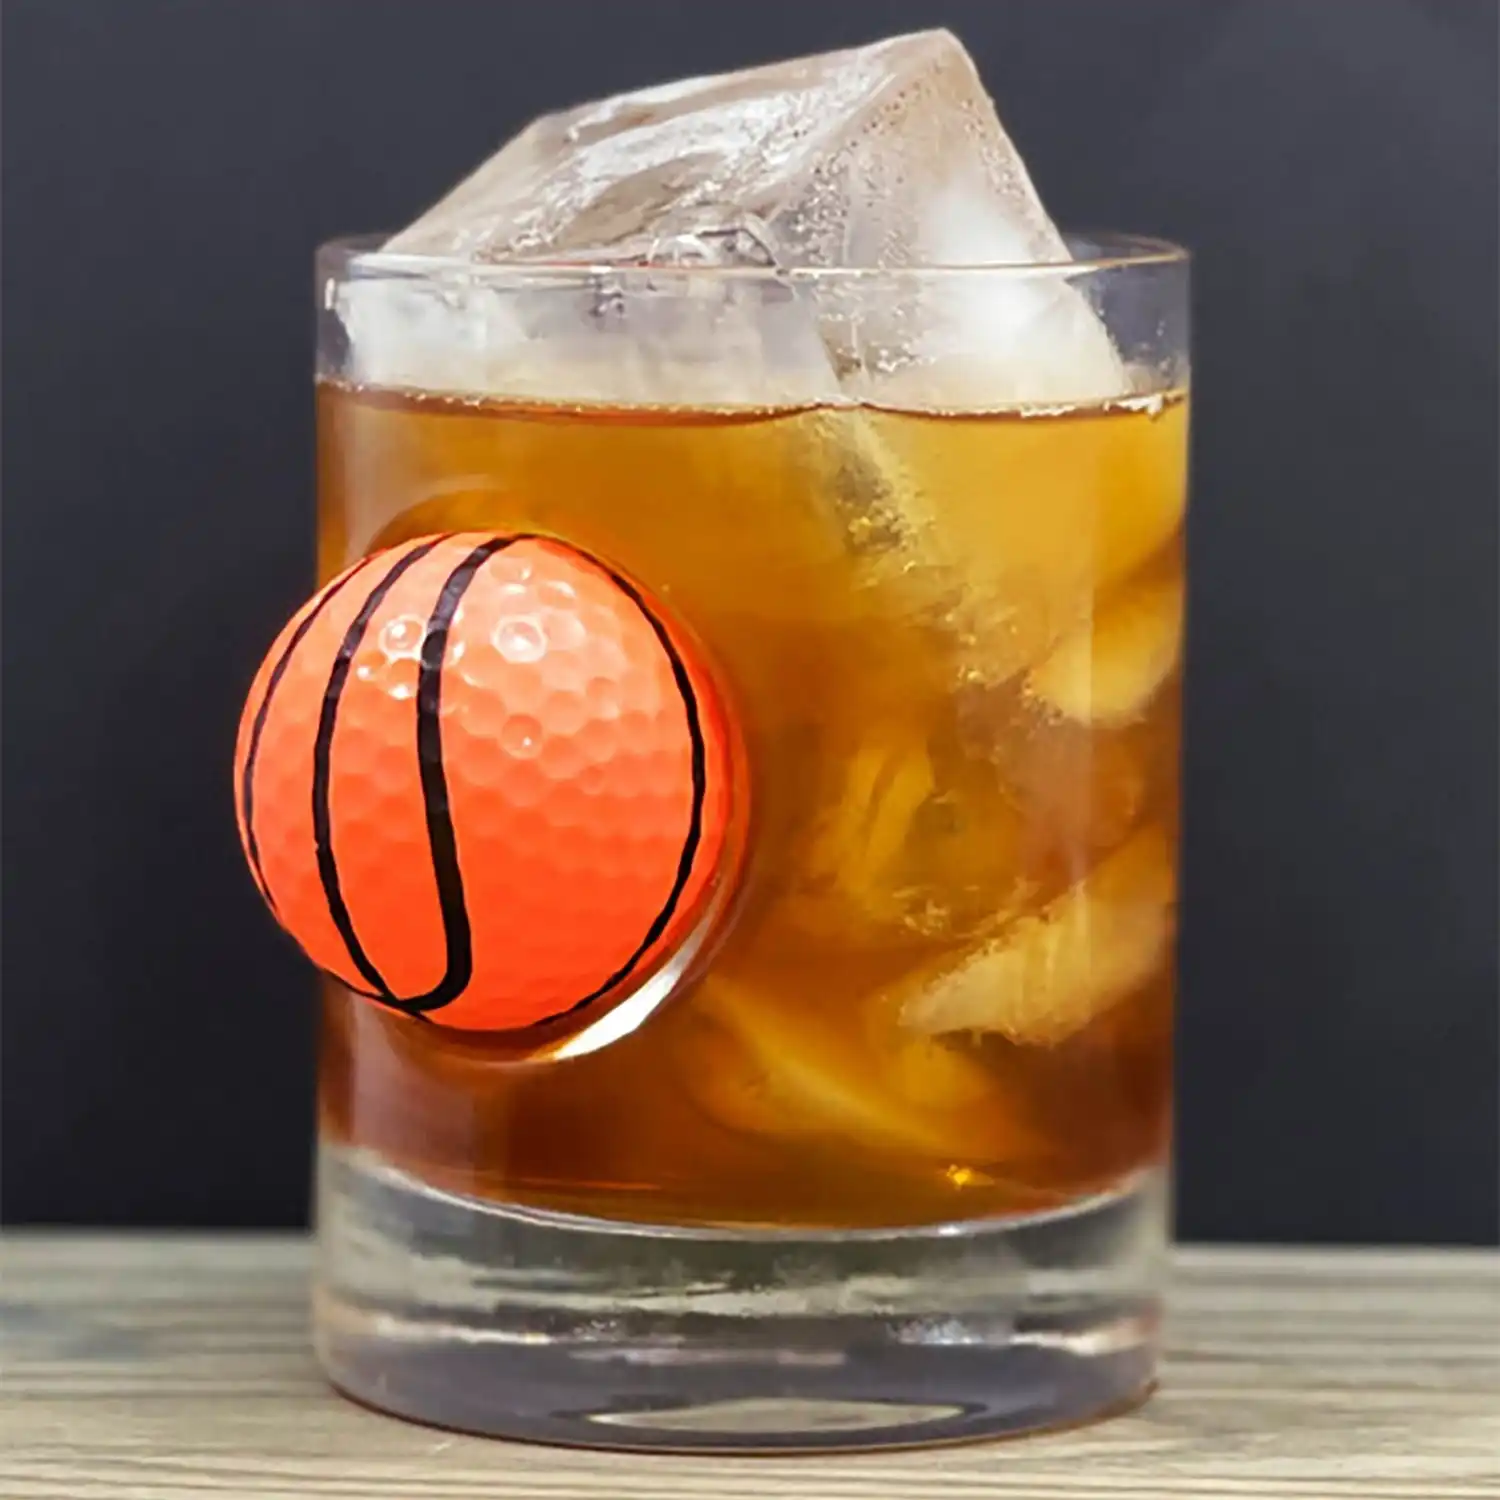 "Good Shot" Whisky Sports Glass - Basketball Ball